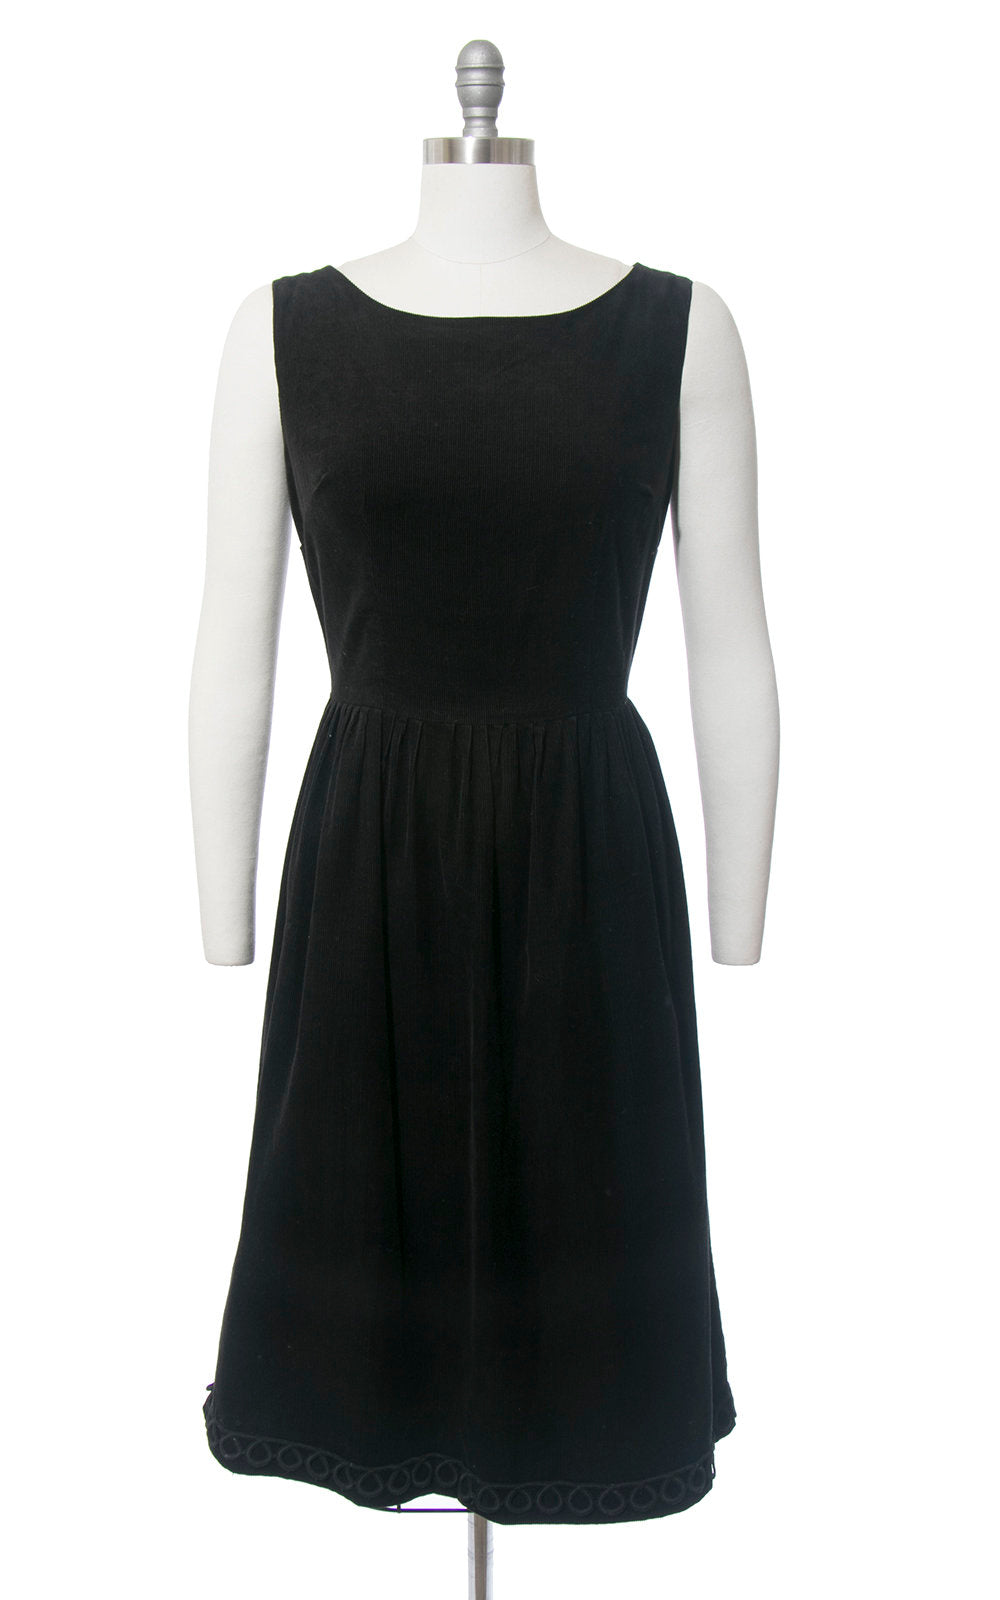 Vintage 1950s Dress | 50s Black Corduroy Cording Trim Full Skirt Sleeveless Day Dress (medium)